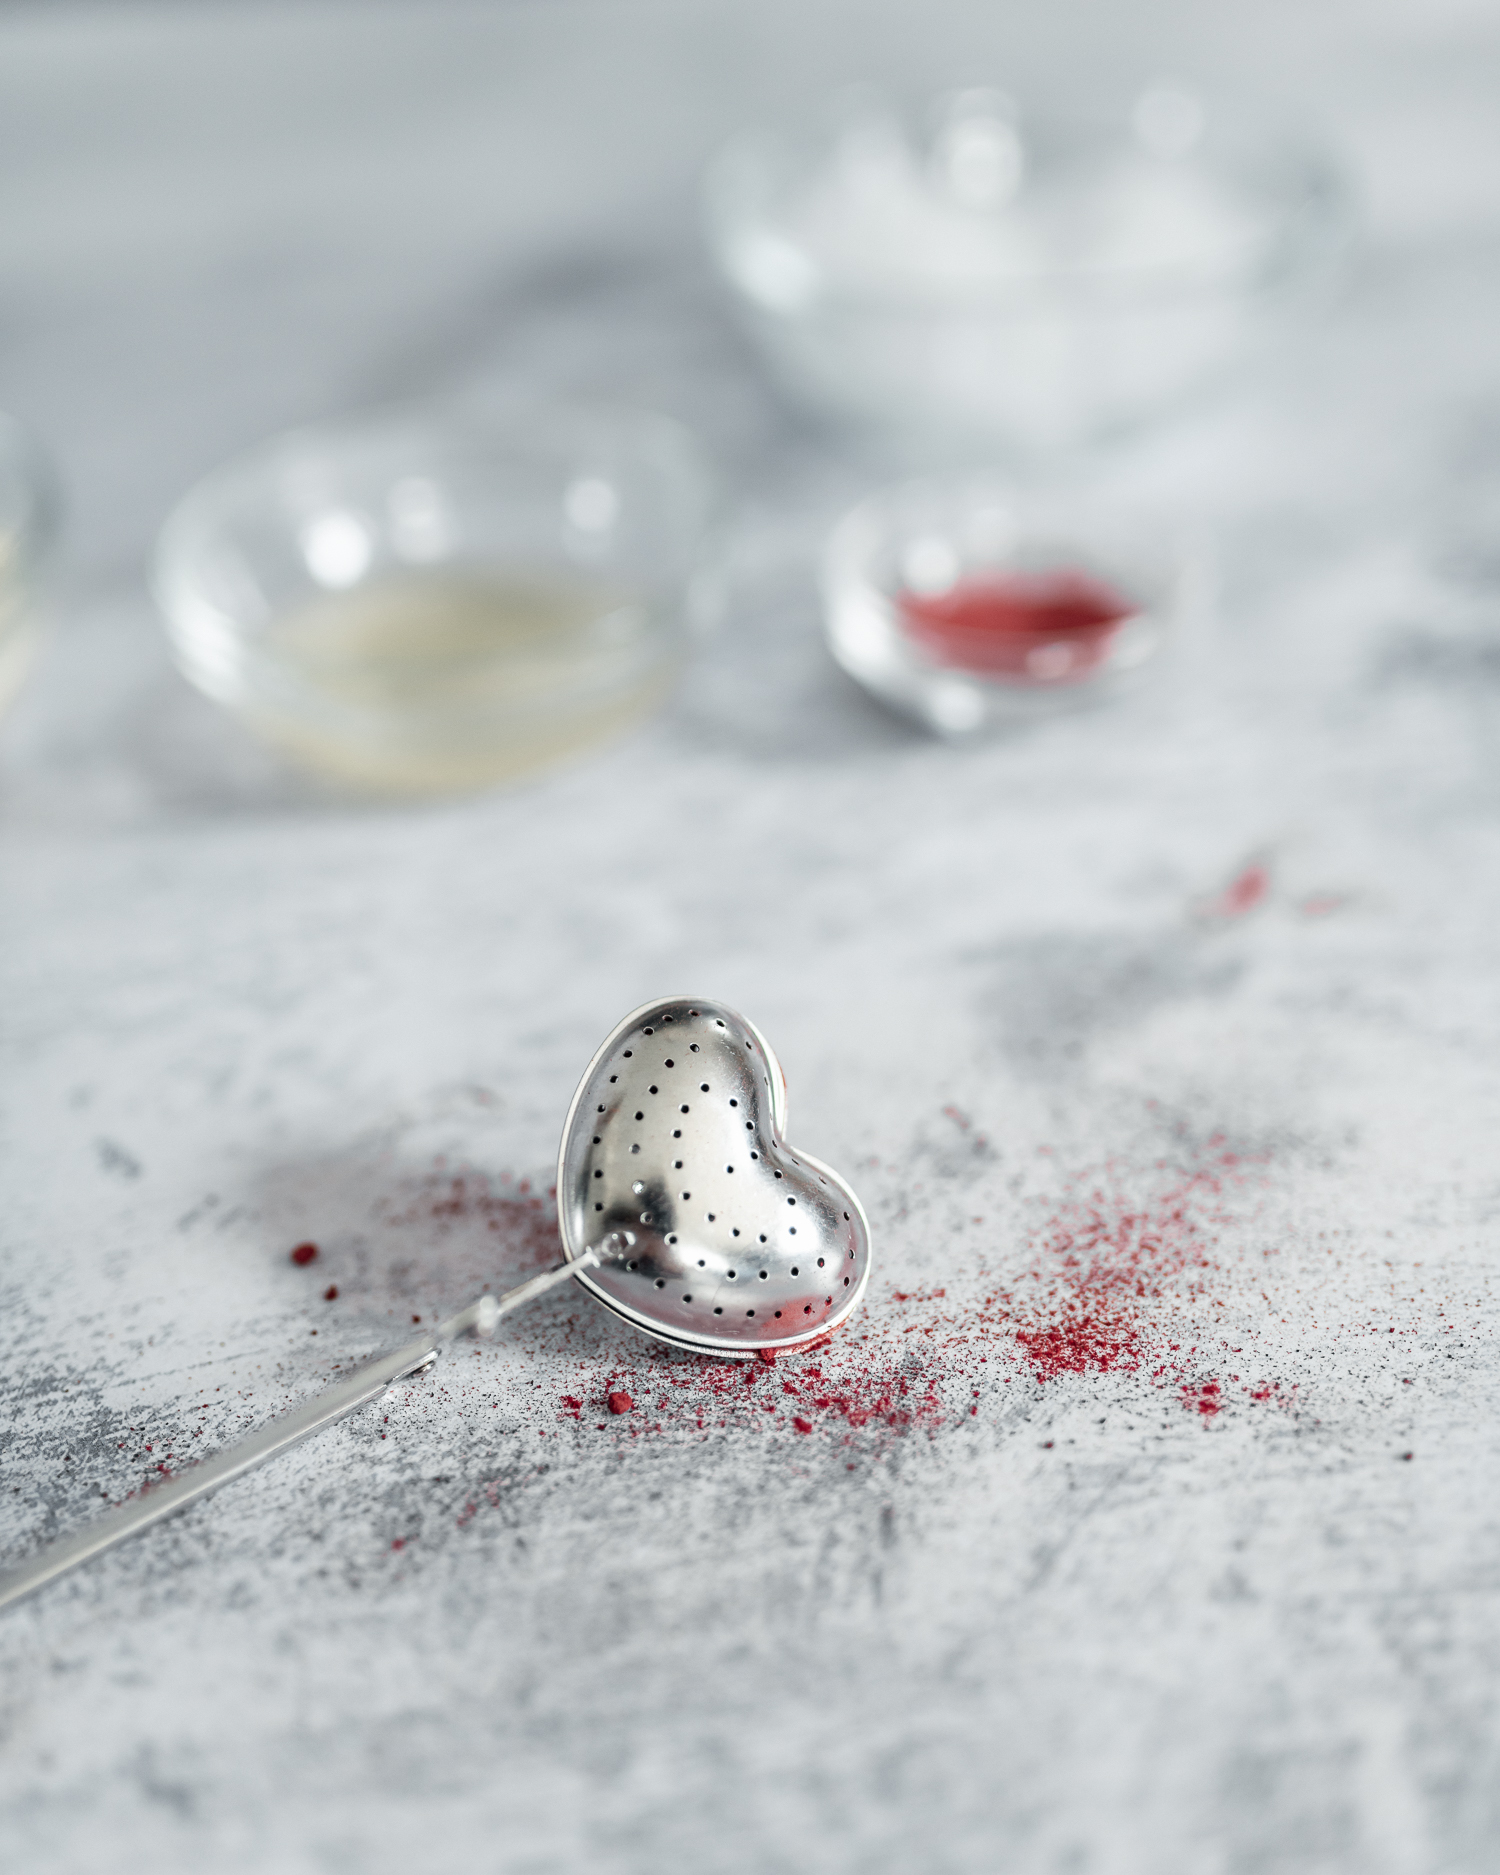 Beetroot powder in heart-shaped tea strainer